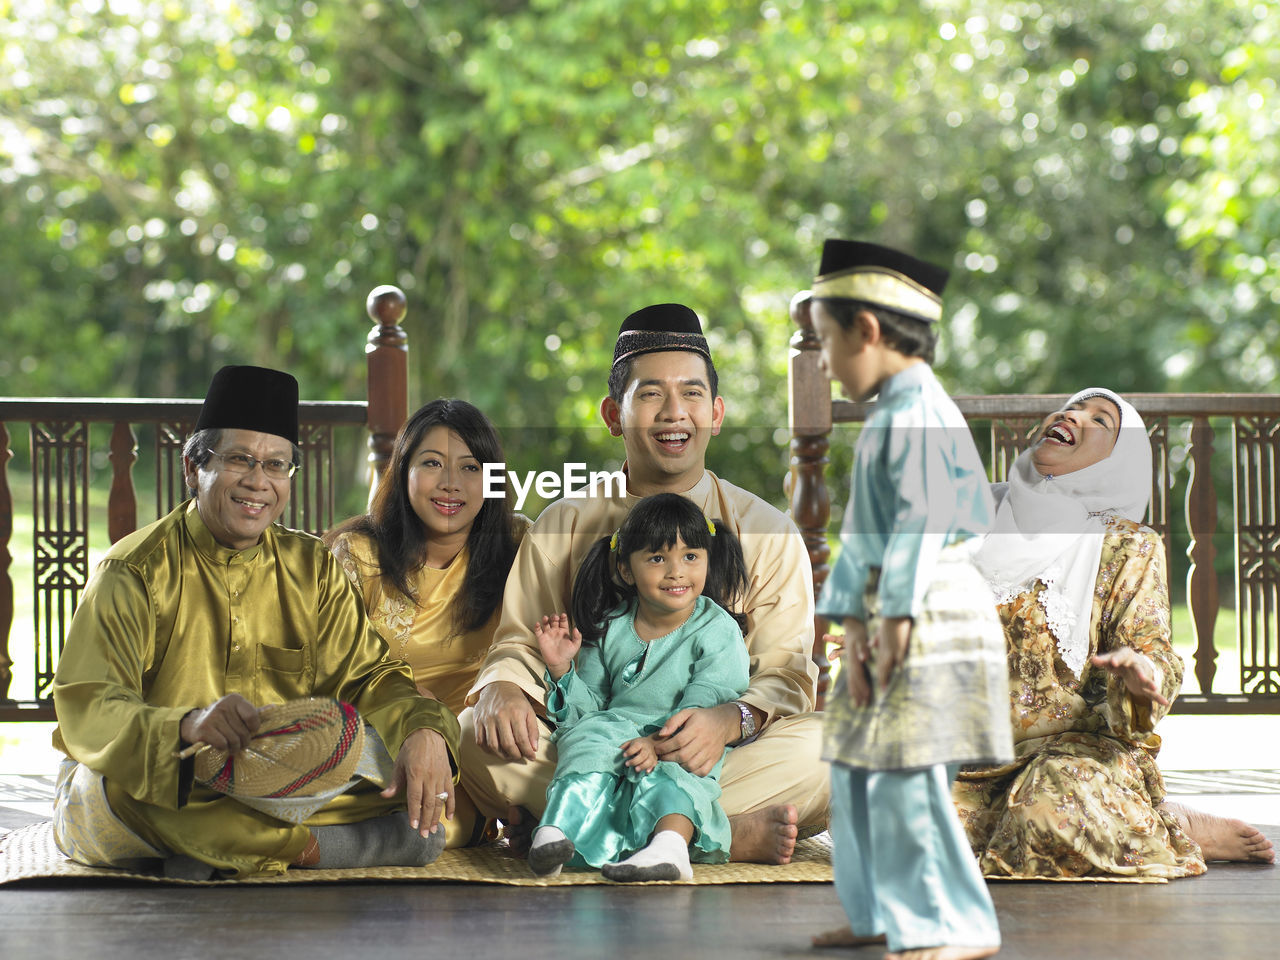 Family sitting in gazebo during traditional festival